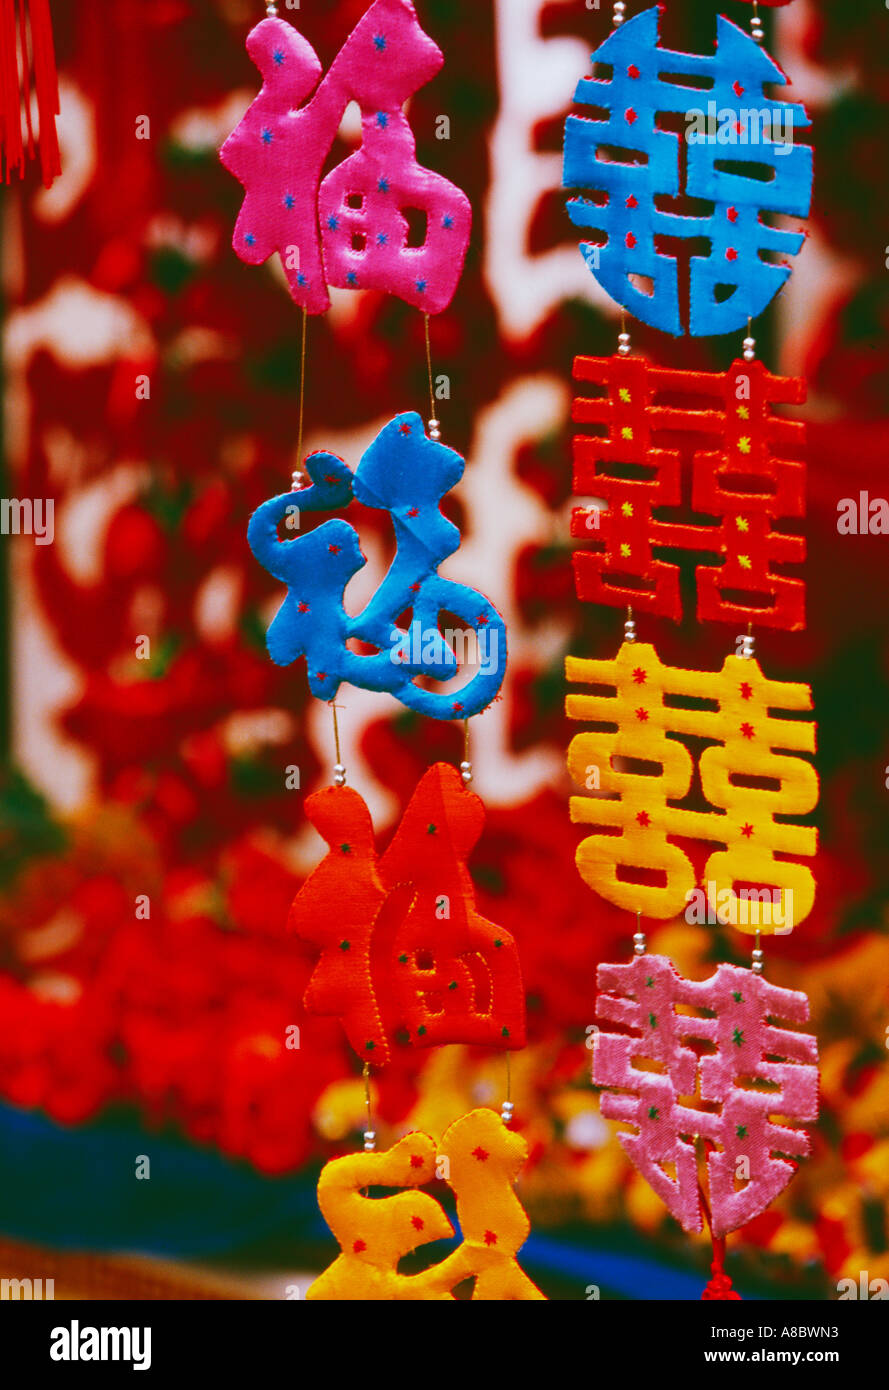 China Suzhou colorful decorations Stock Photo